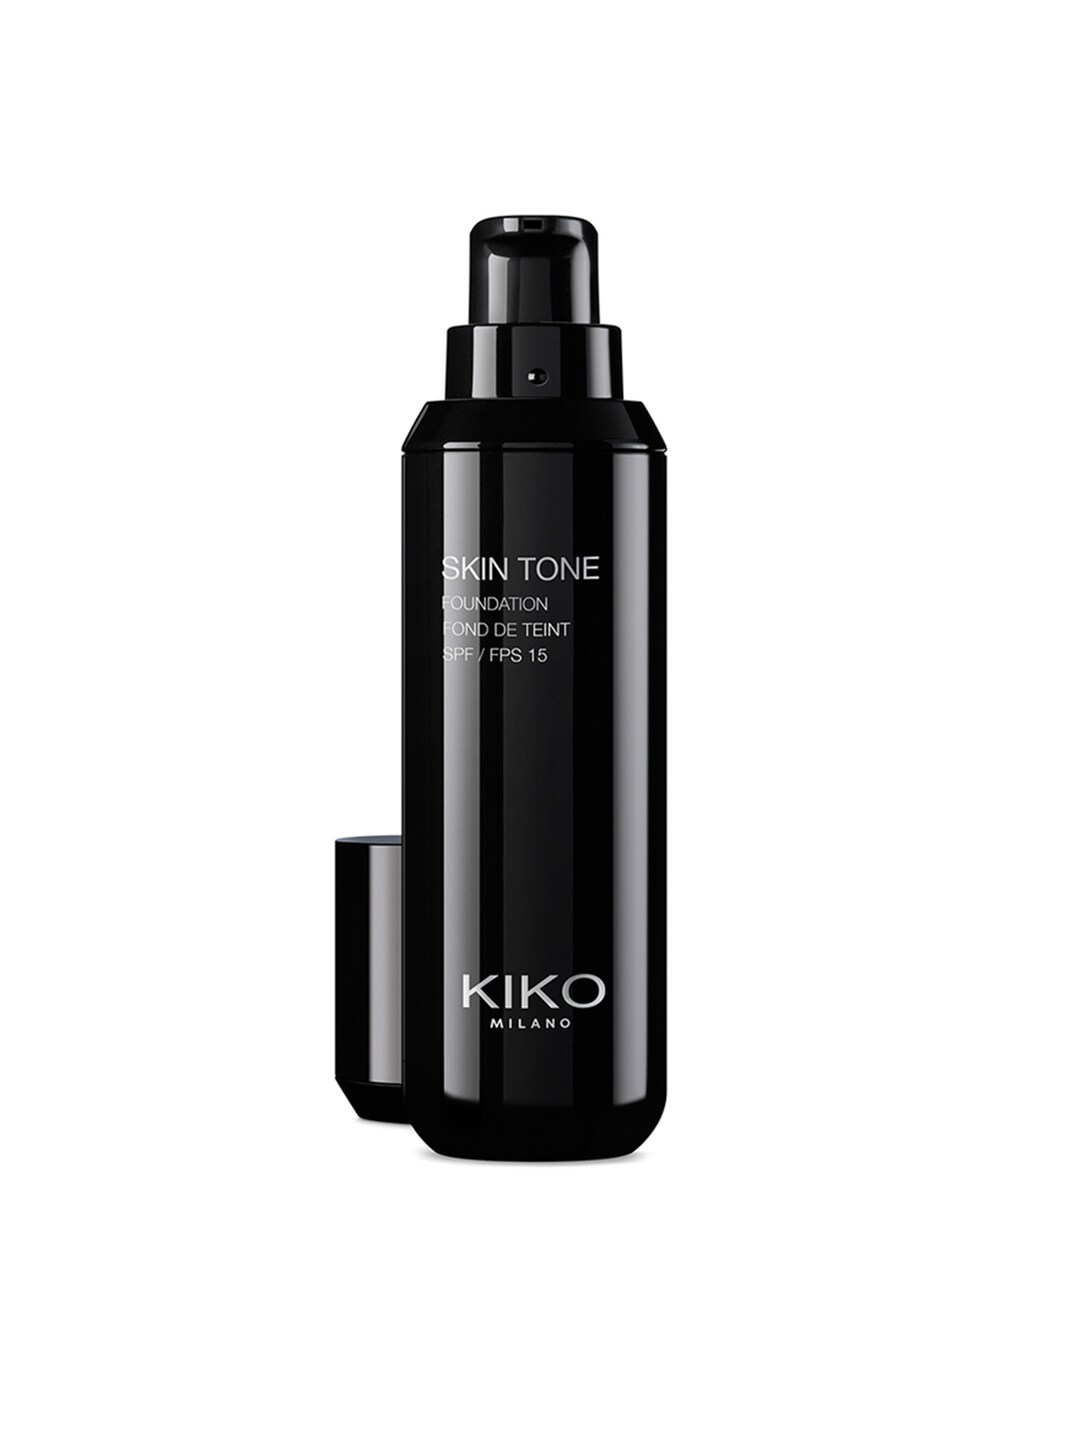 KIKO MILANO SPF 15 Skin Tone Foundation - Warm Beige 110 Price in India